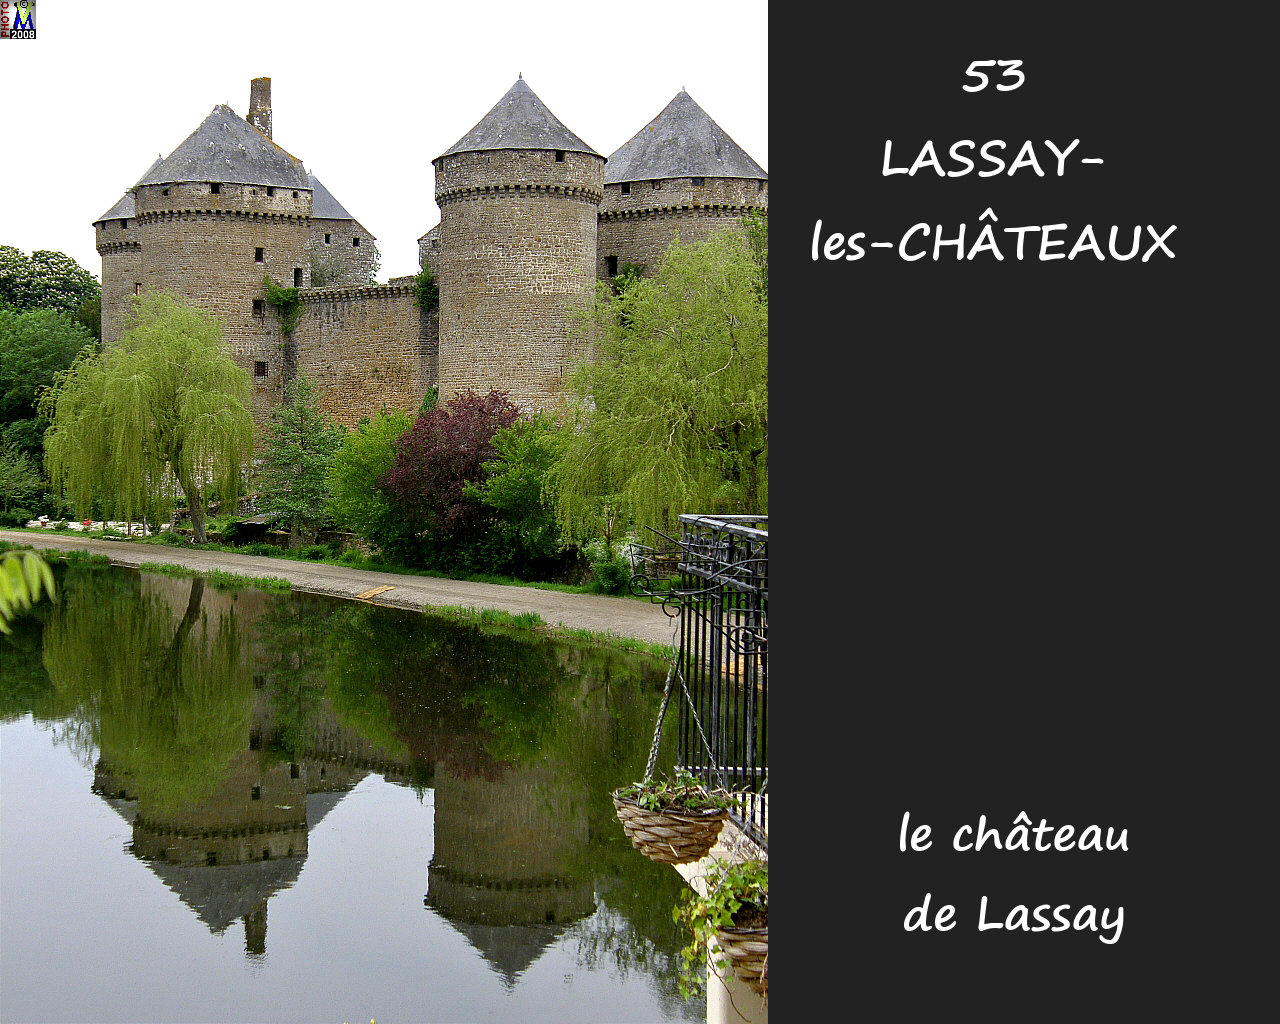 53LASSAY-CHATEAUX_chateauL_124.jpg